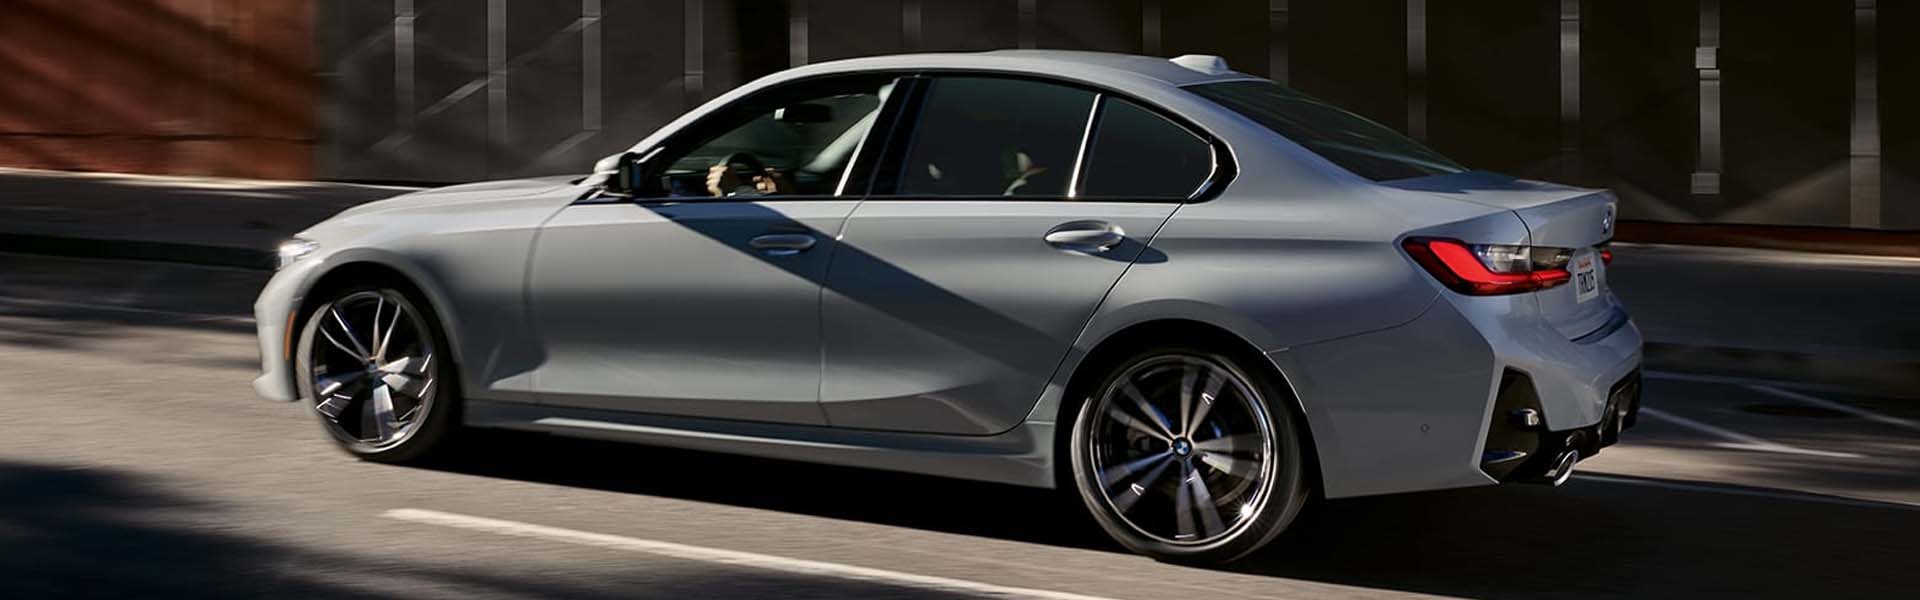 BMW 3 Series Luxury Sedan Detroit